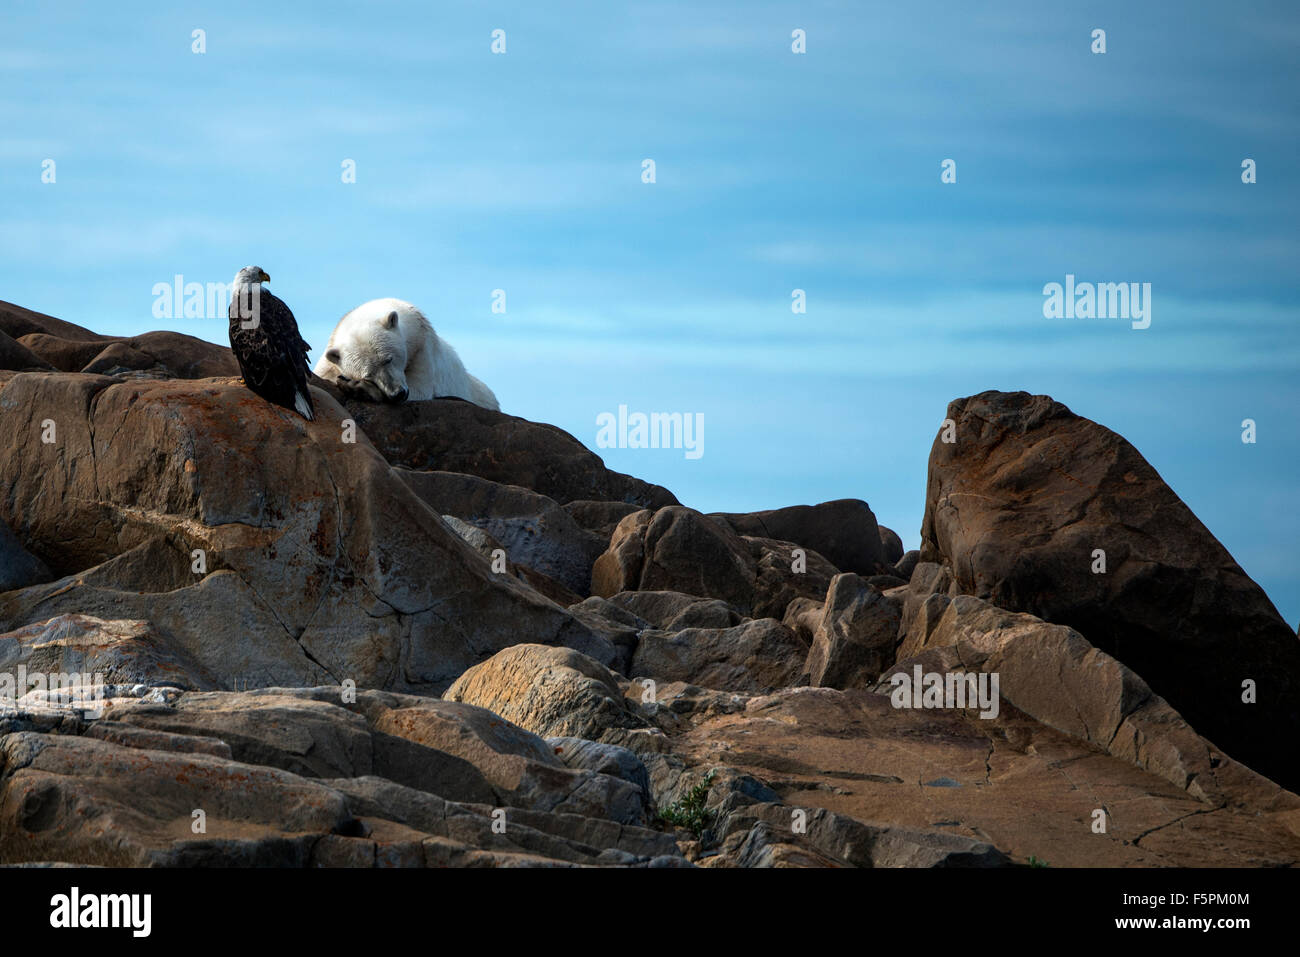 Polar Bear adult (Ursus maritimus) sleeping on rocks with Bald Eagle (Haliaeetus leucocephalus) Churchill, Manitoba, Canada Stock Photo